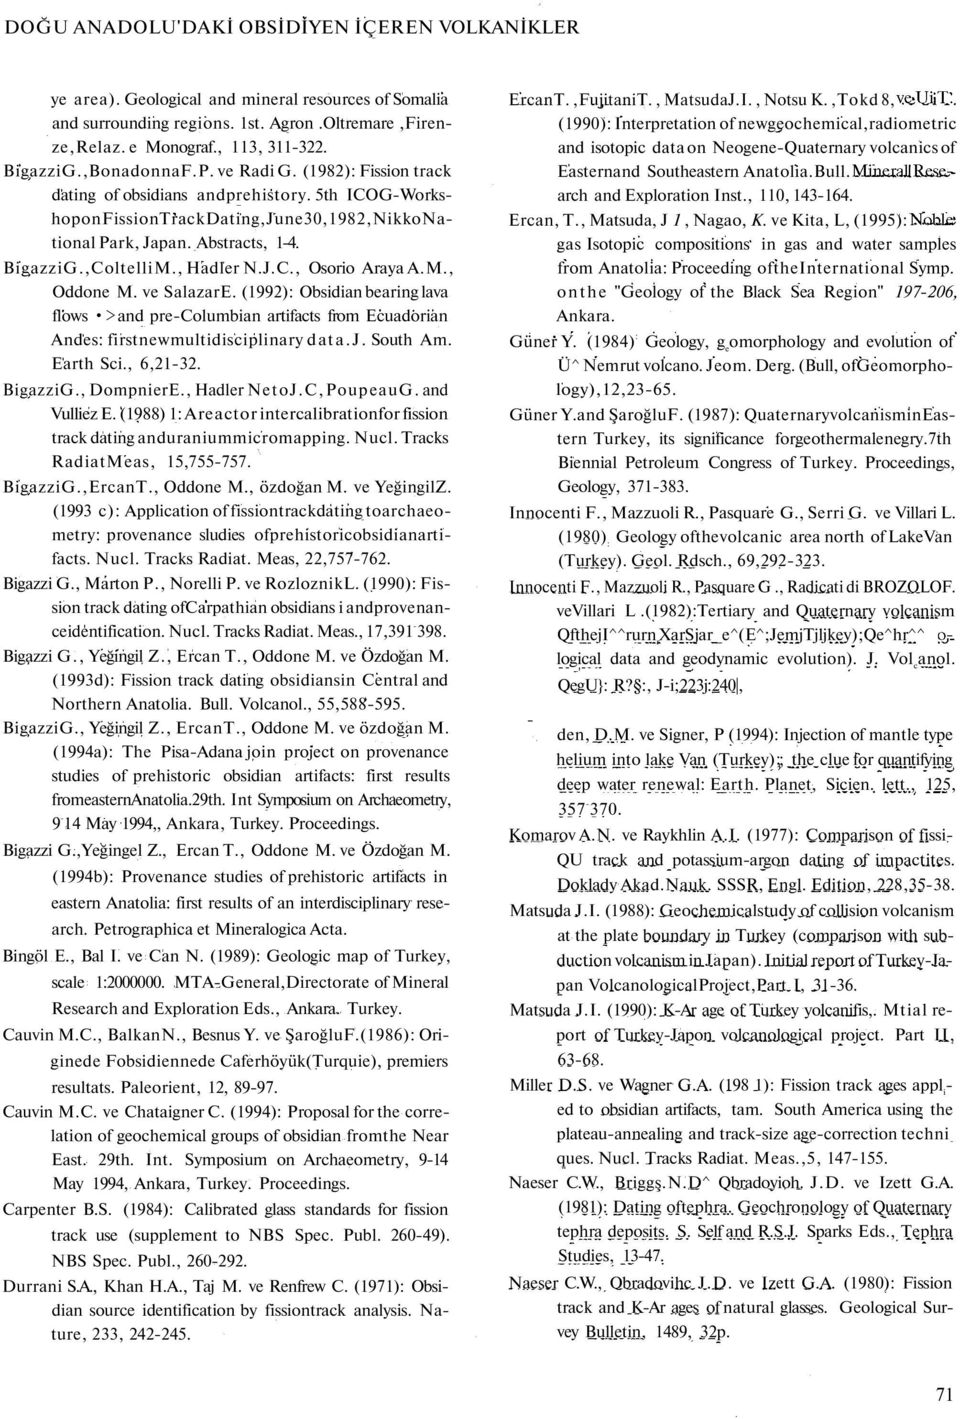 , Hadler N.J.C., Osorio Araya A.M., Oddone M. ve SalazarE. (1992): Obsidian bearing lava flows > and pre-columbian artifacts from Ecuadorian Andes: firstnewmultidisciplinary data.j. South Am.